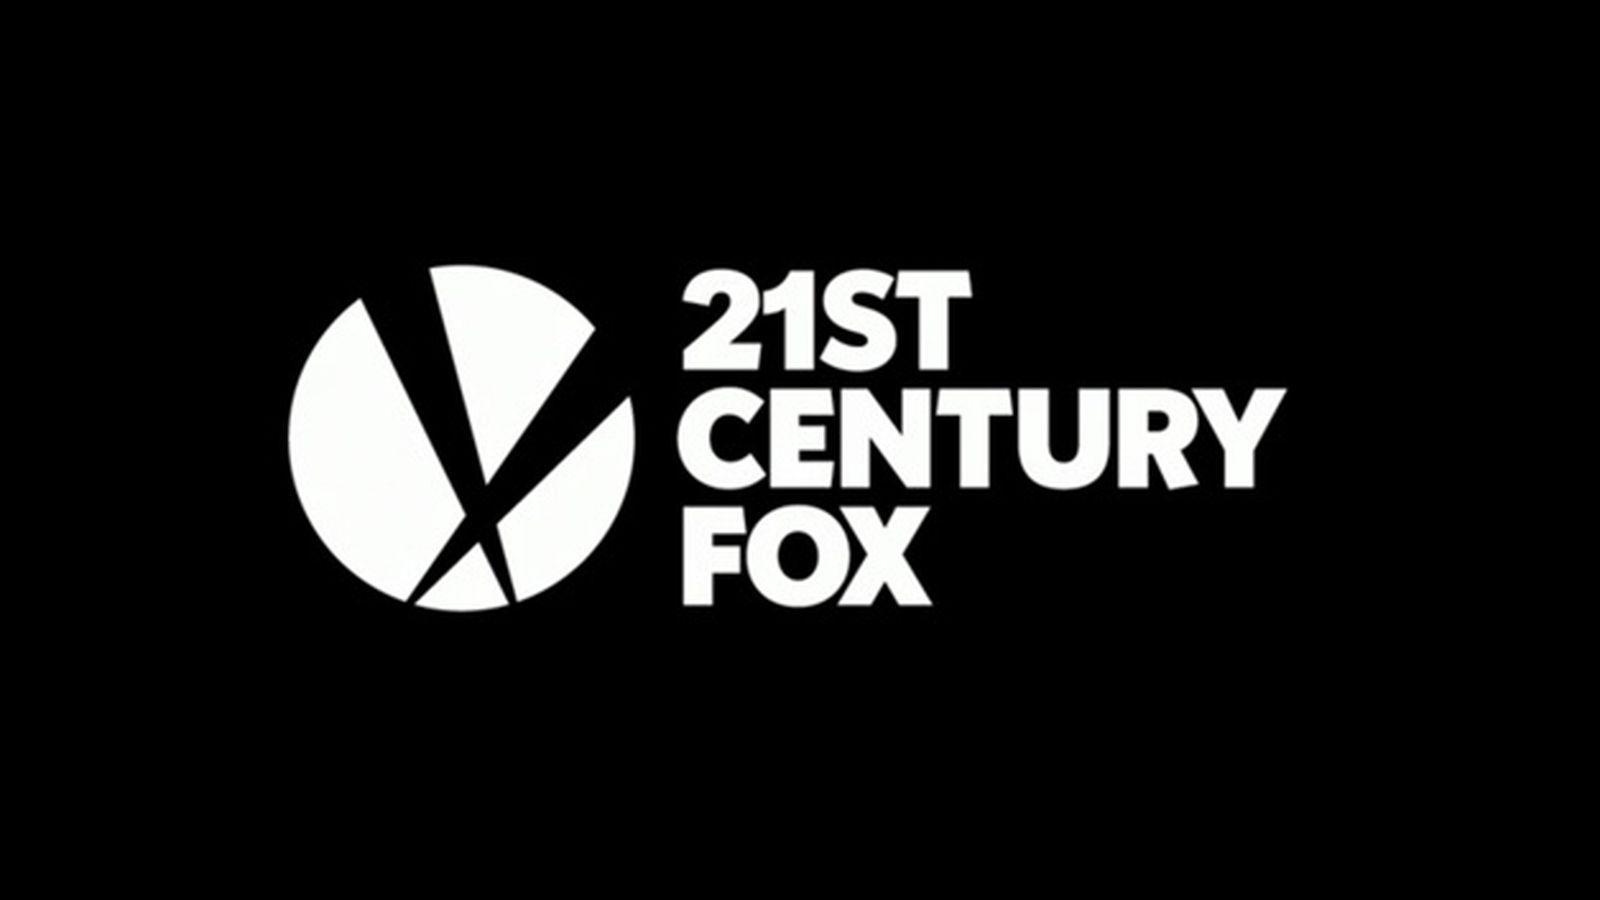 20th Century Fox Logo - 21st Century Fox logo unveiled ahead of News Corp split